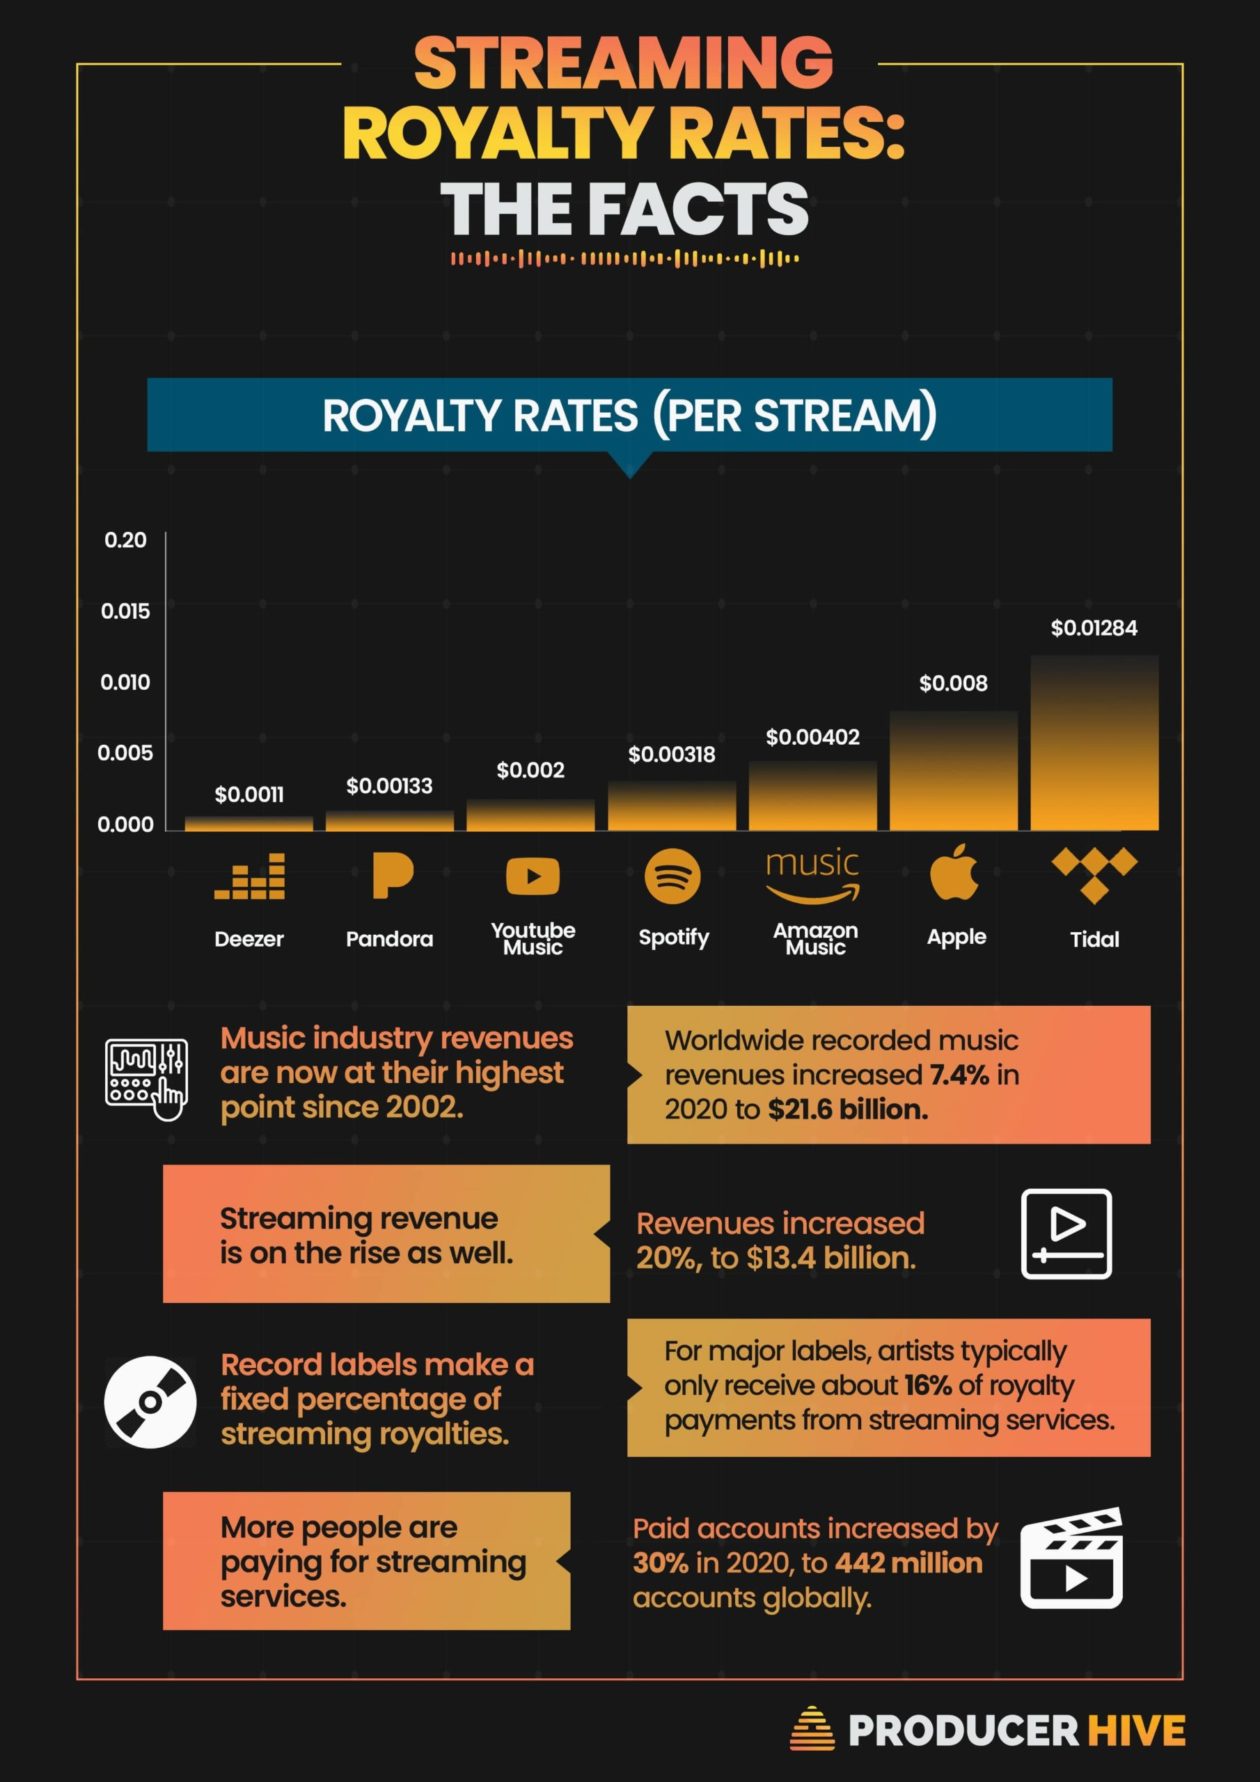 Music streaming royalties per platform statistic scales to 1